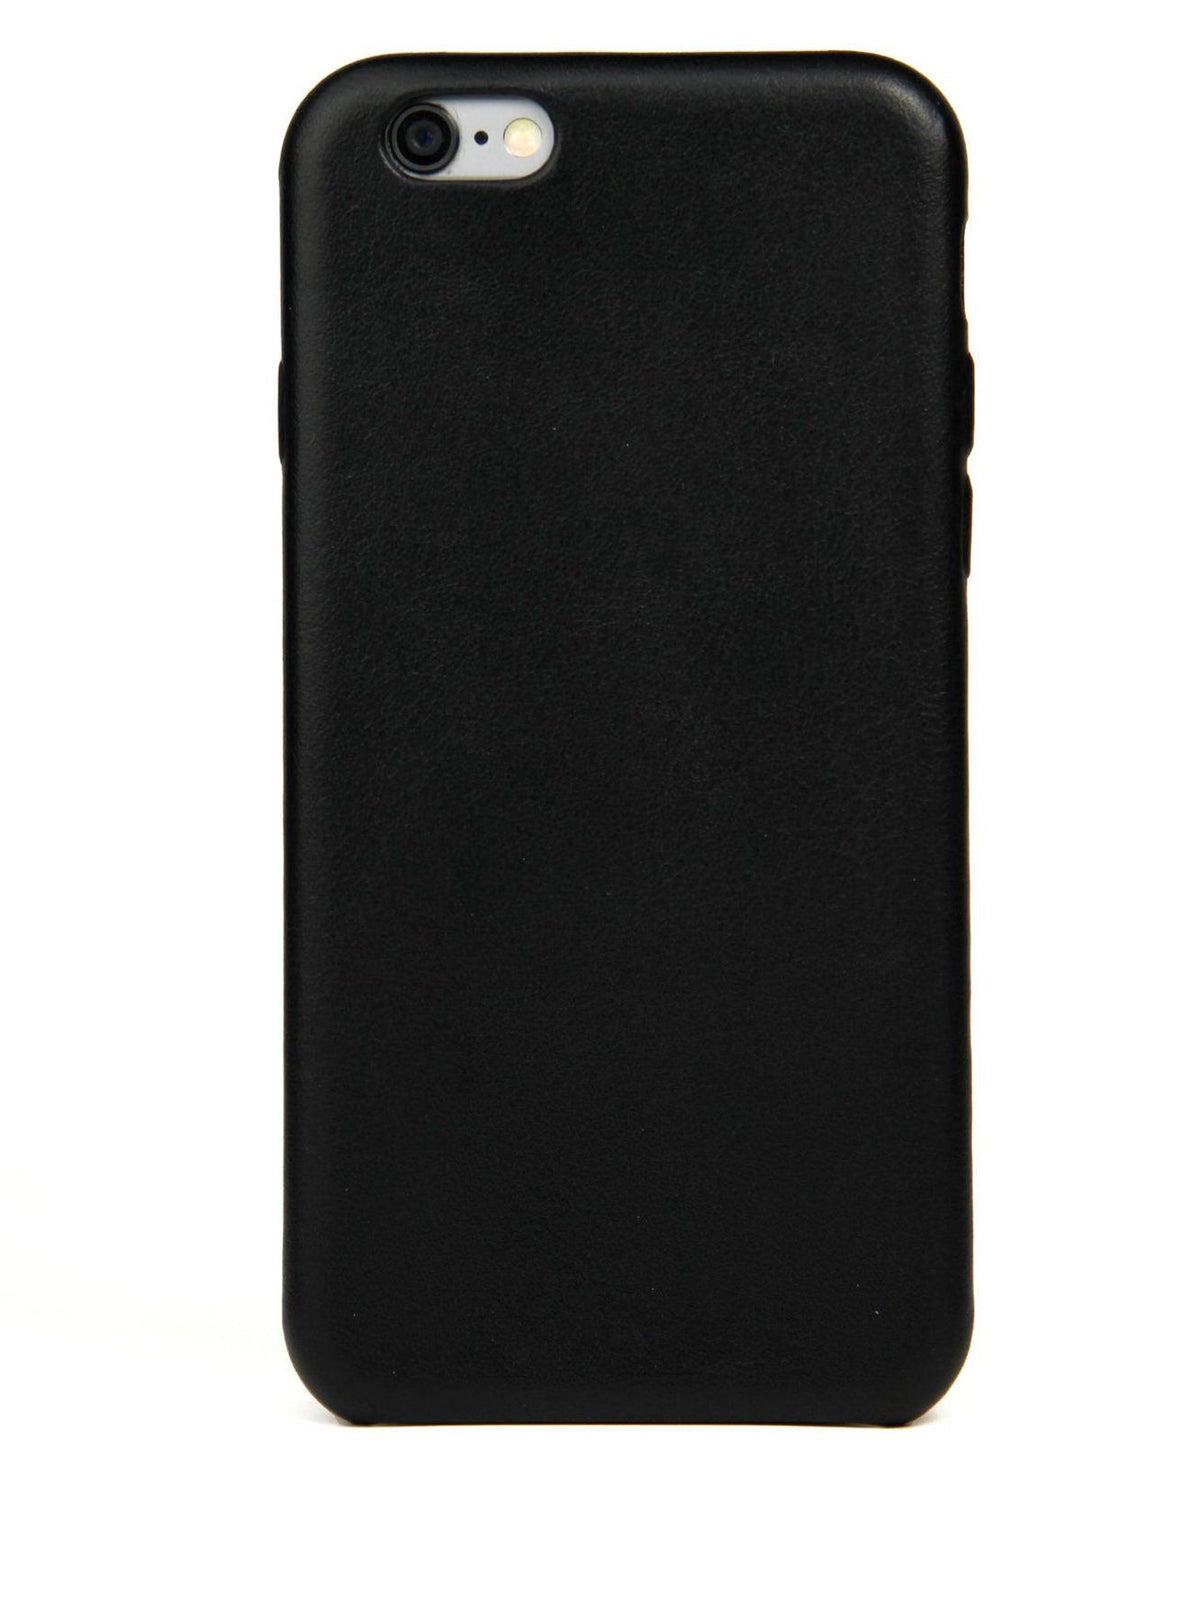 Coque iPhone 6, cuir noir